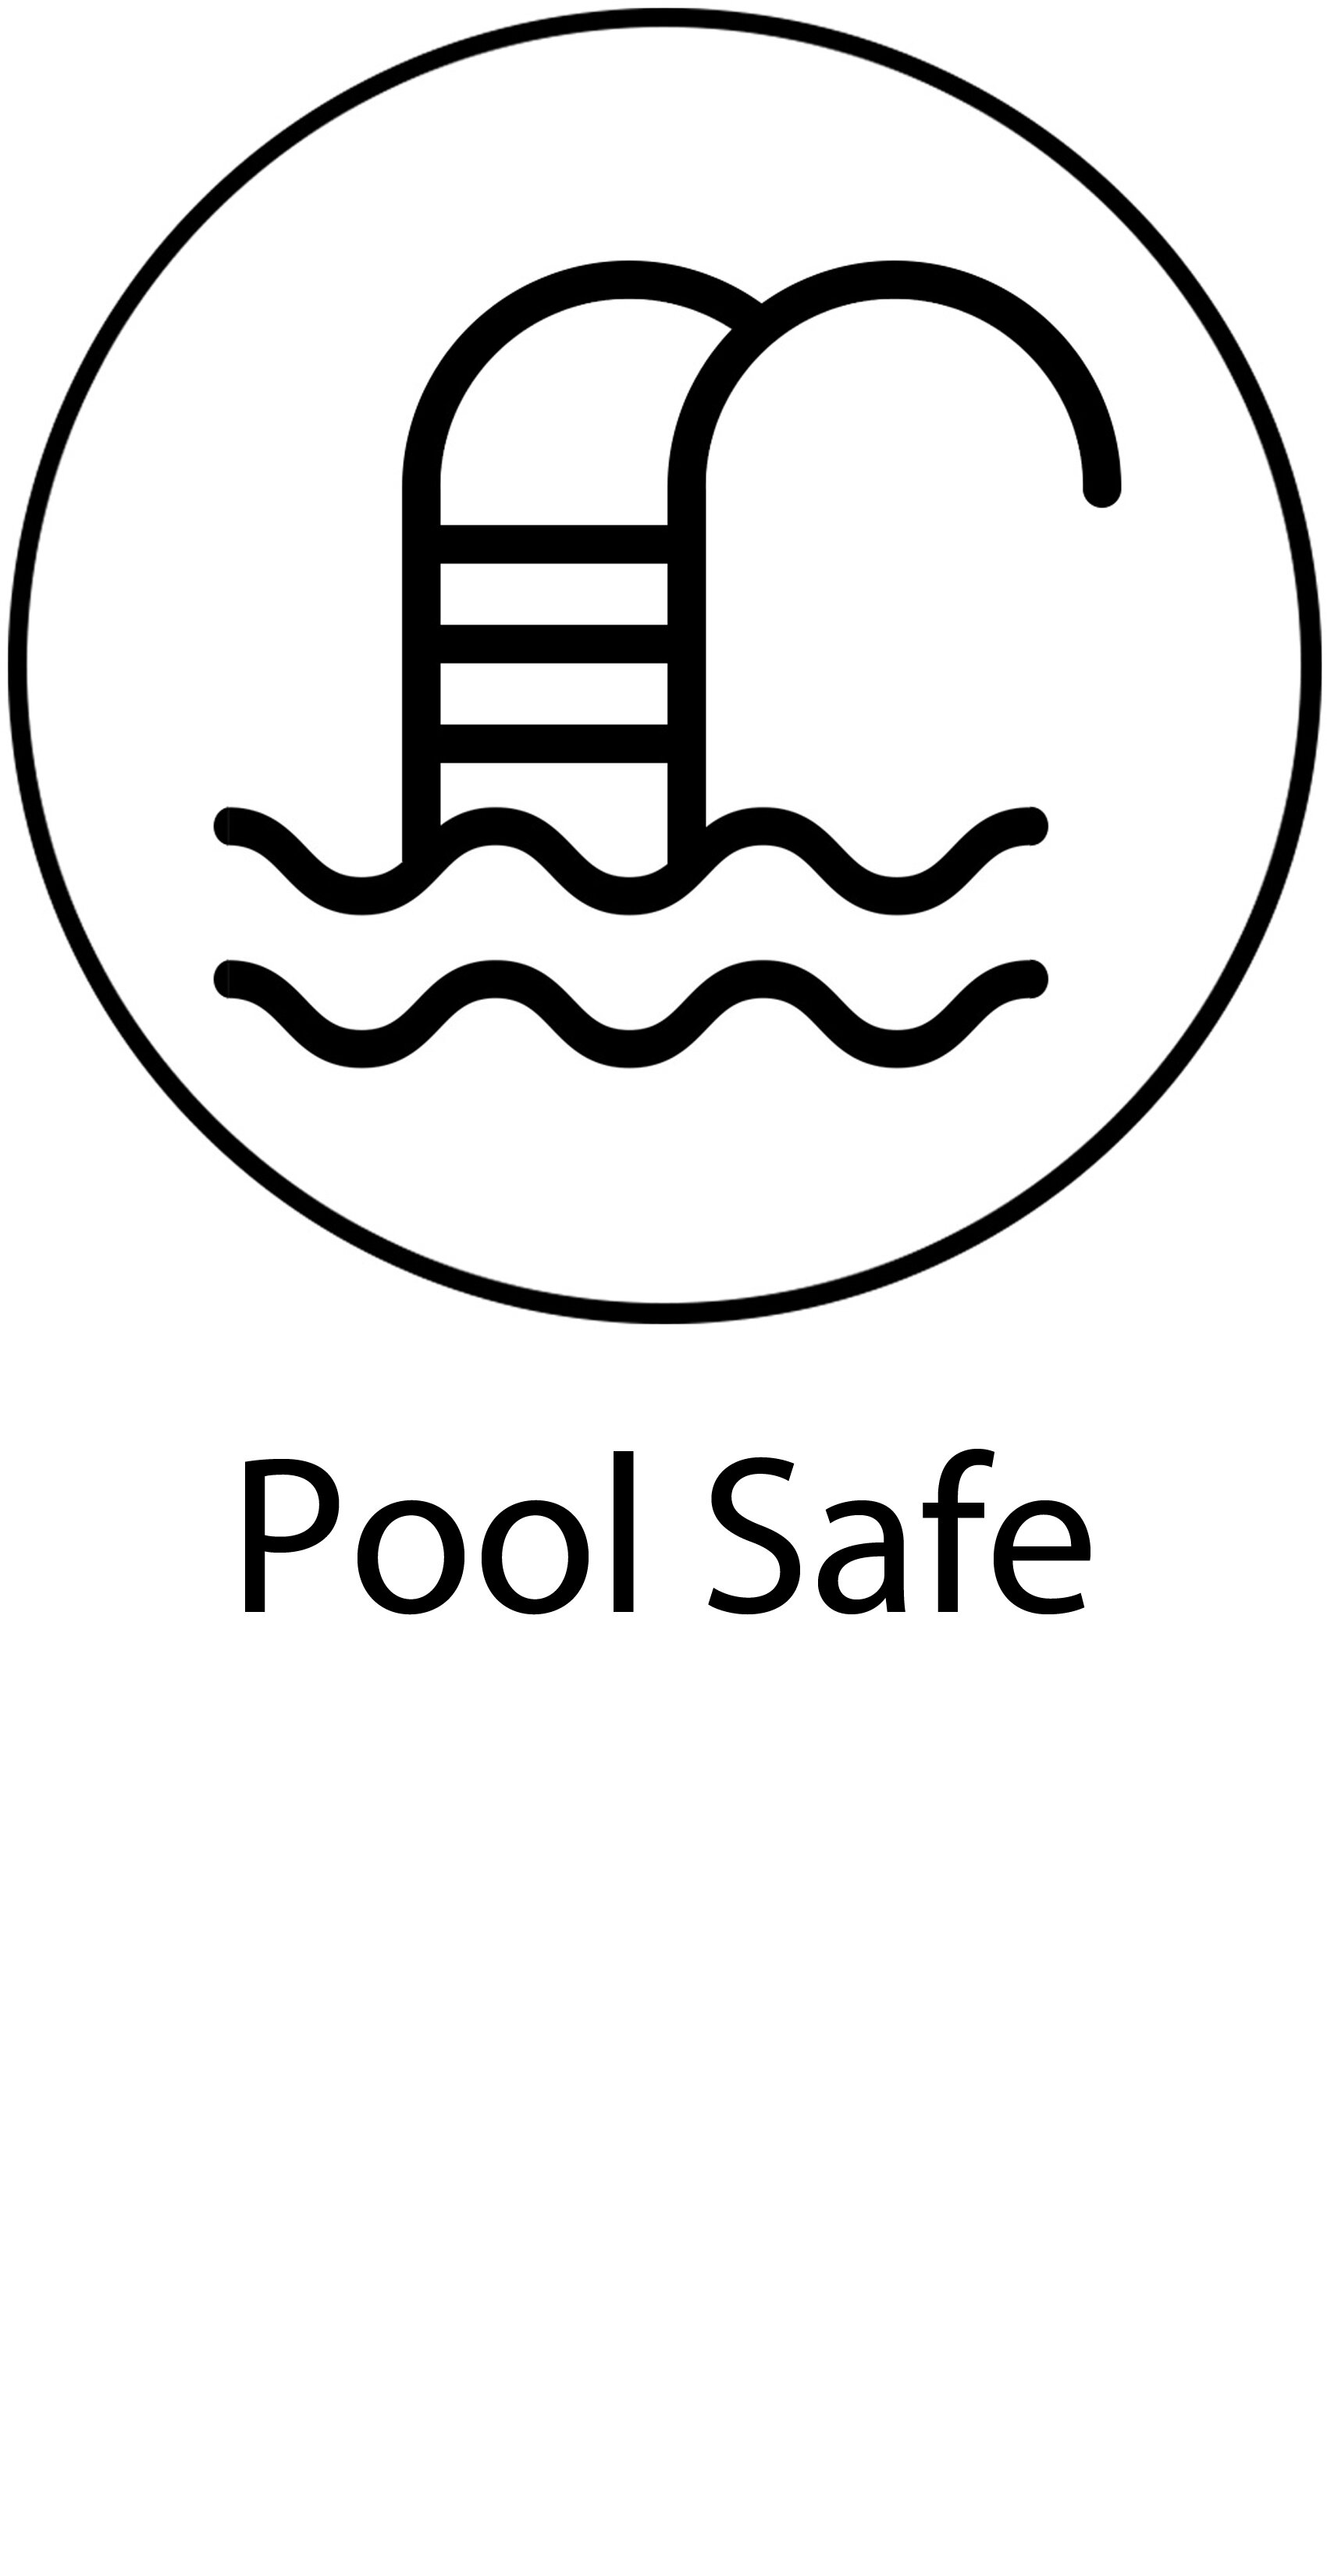 06 Pool Safe.jpg